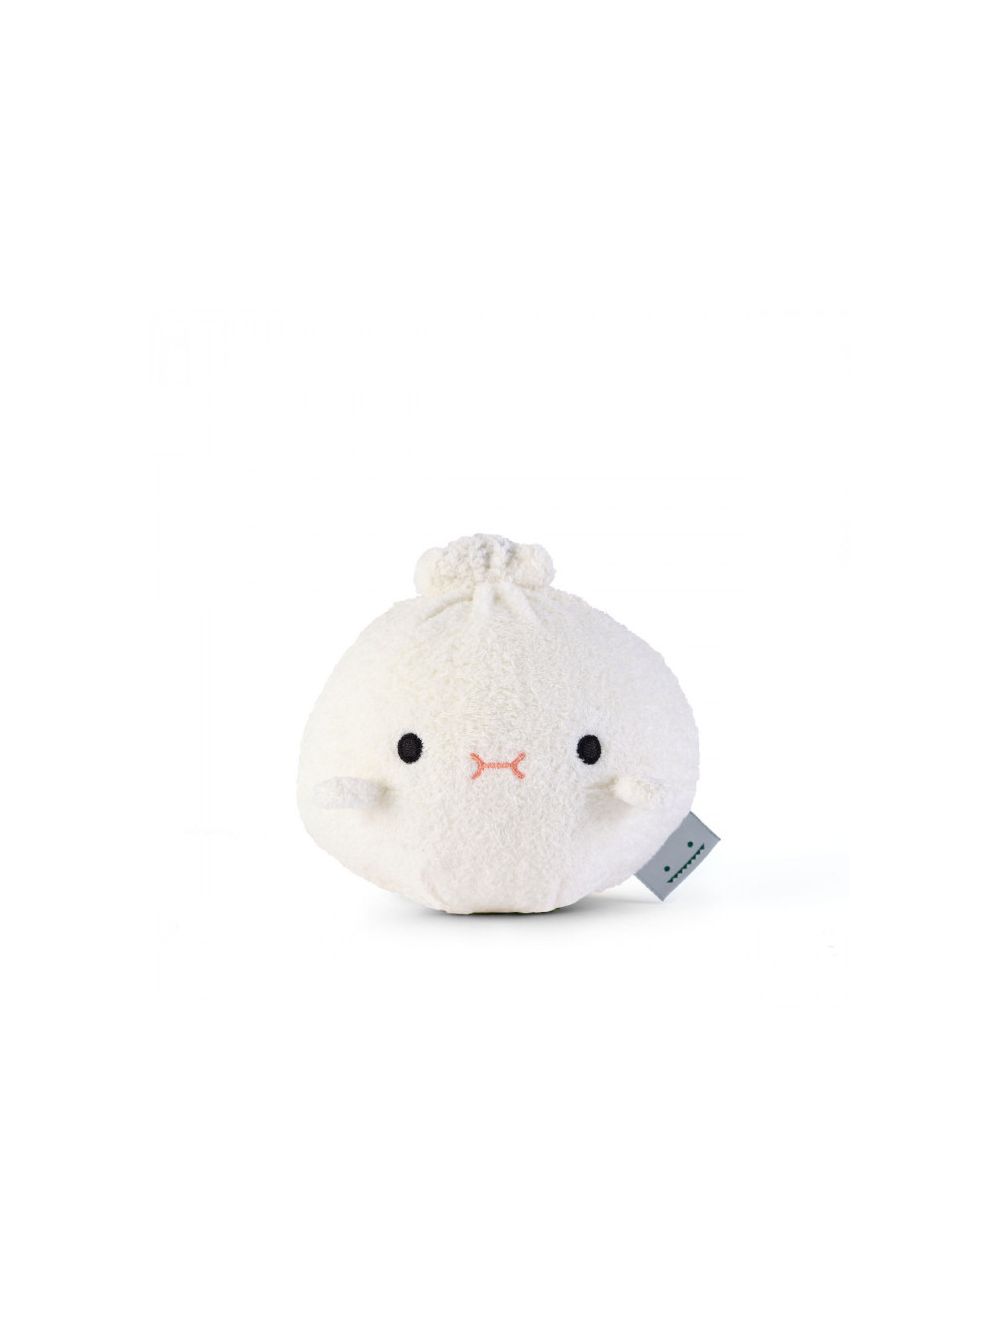 Noodoll Mini Plush Toy - Ricebao